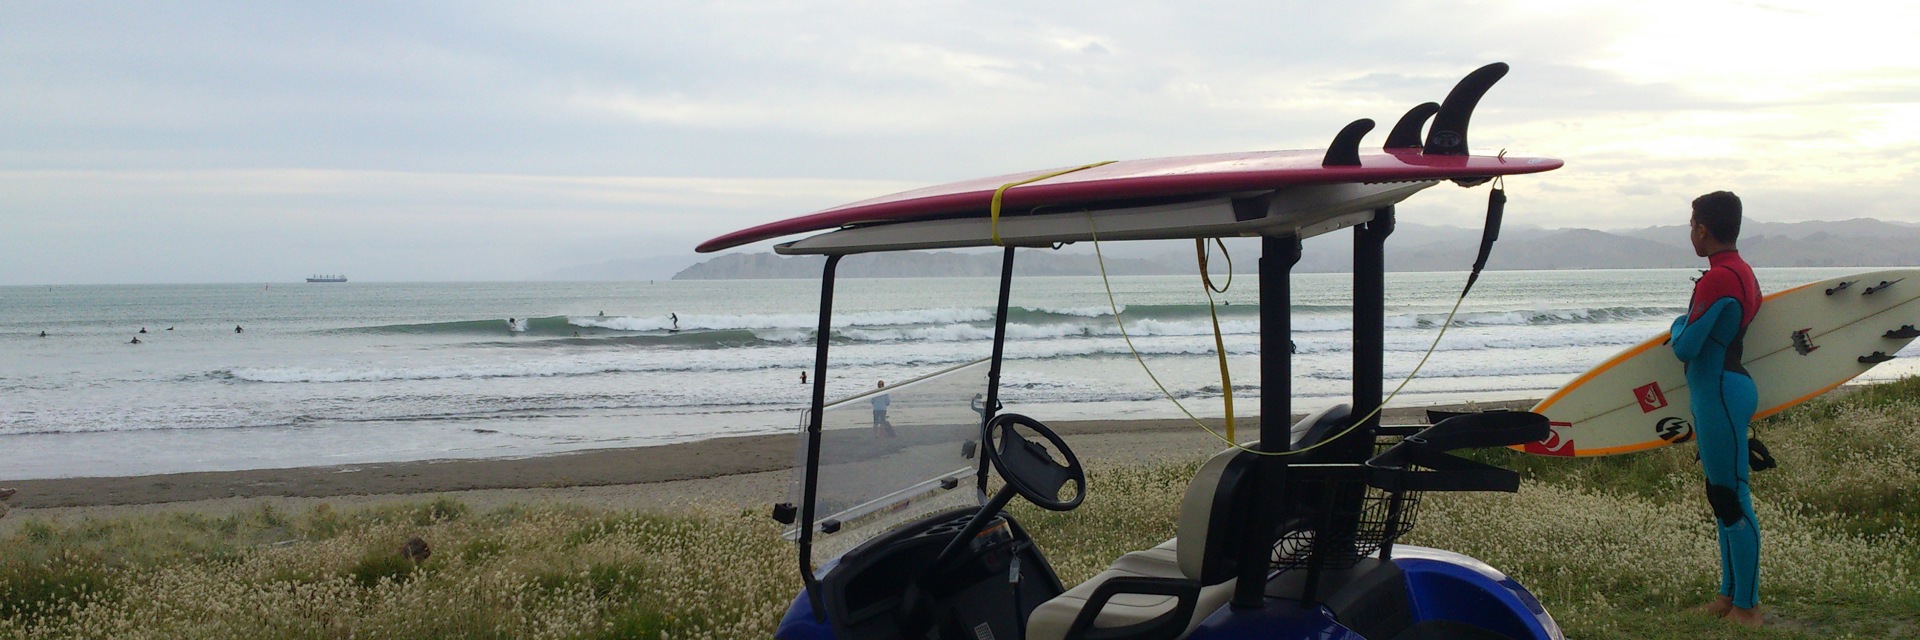 Waikanae Beach Surfing